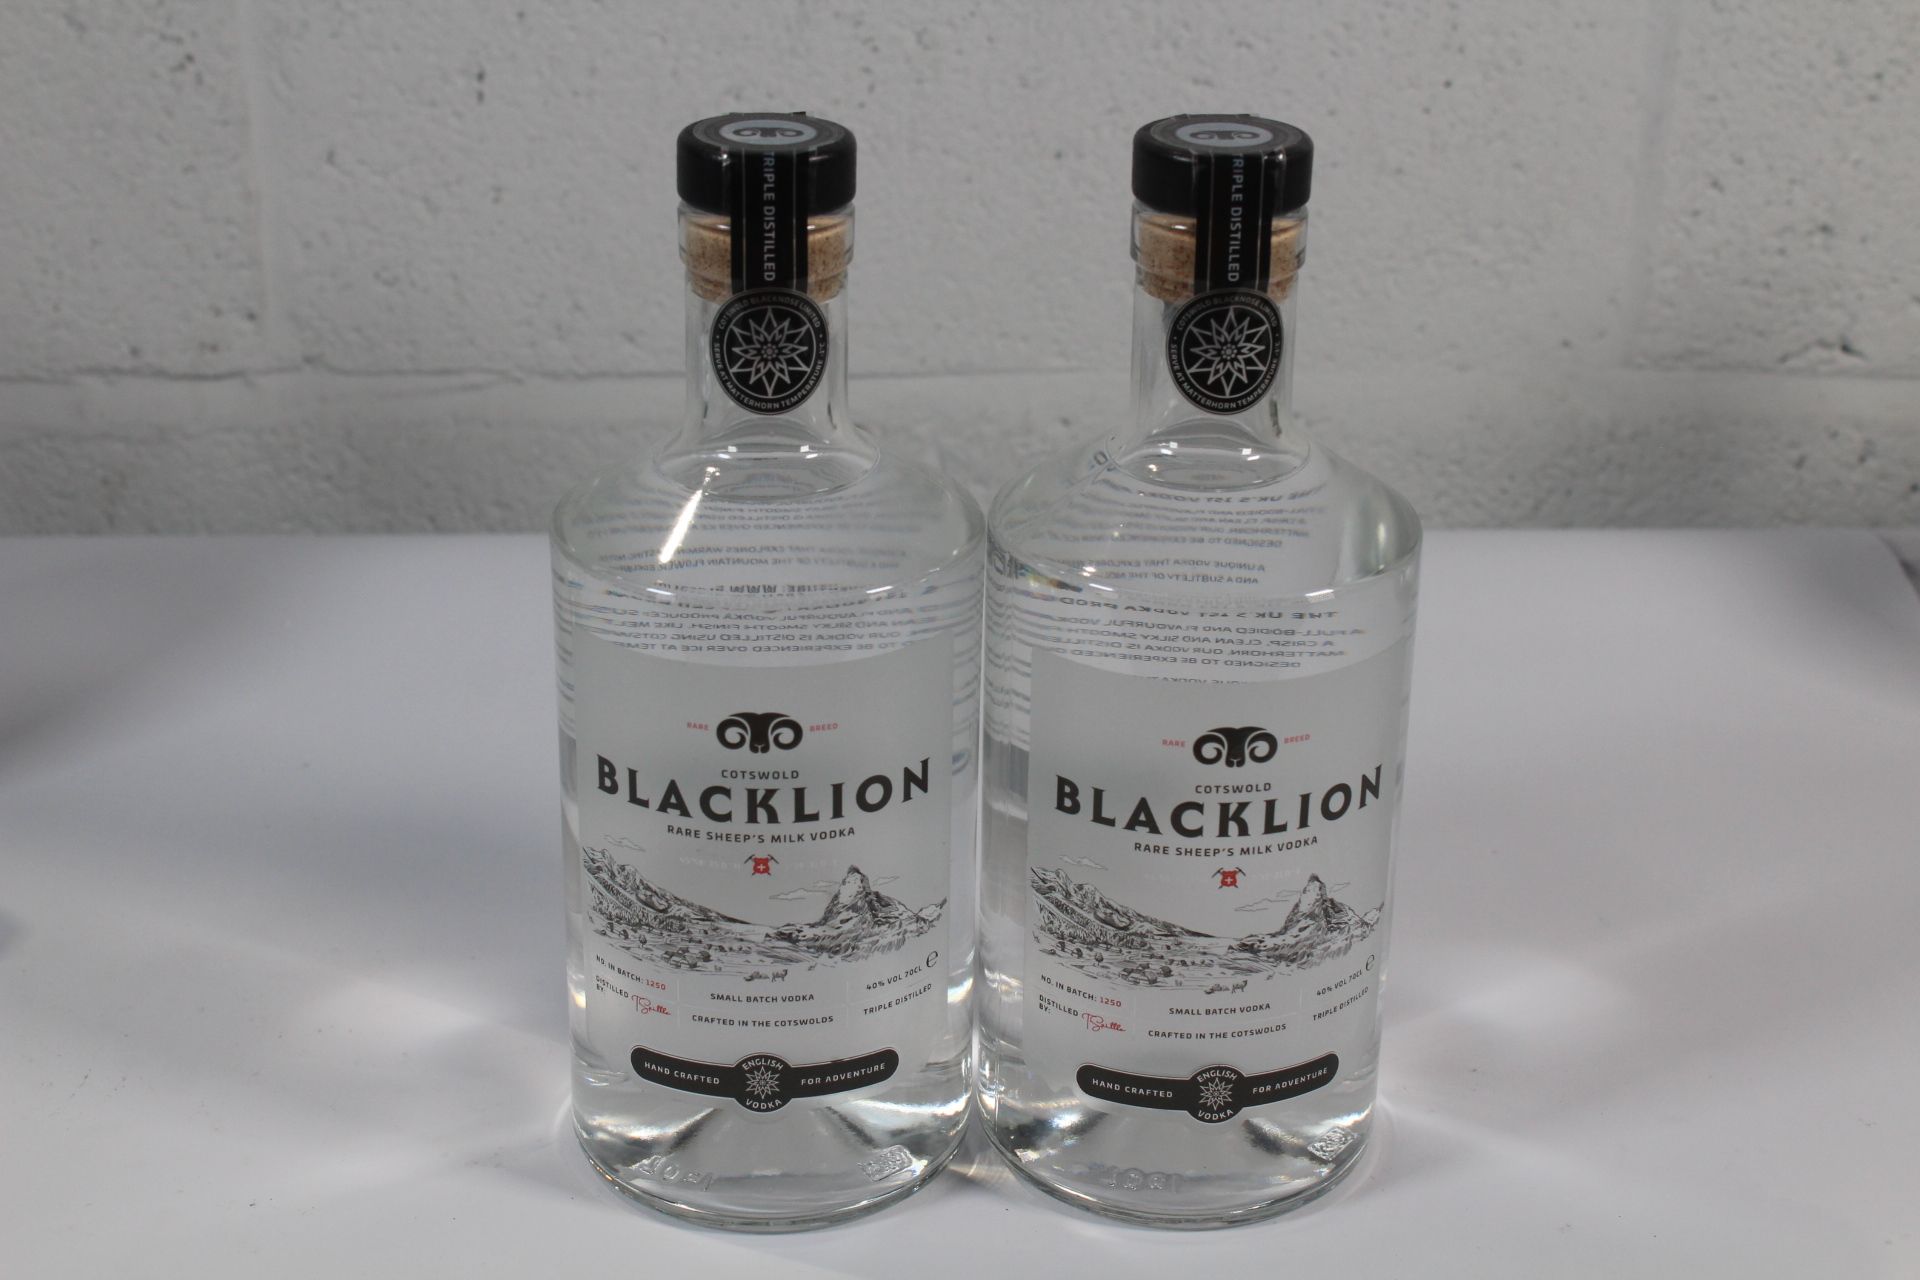 Two Cotswold Blacklion Rare Sheep's Milk Vodka 2 x 700ml.